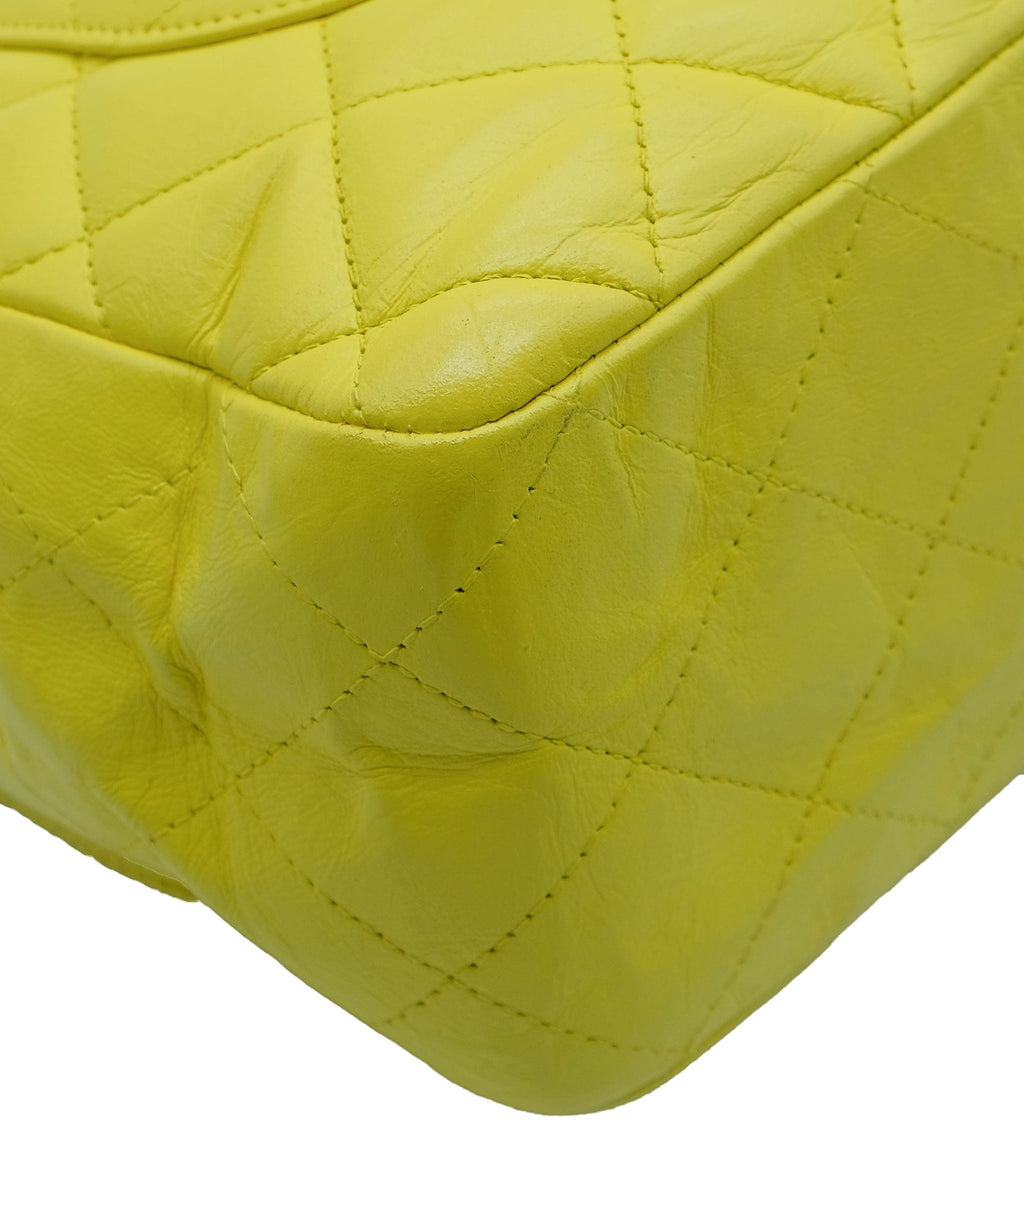 Chanel Madison flap yellow 💛 bag